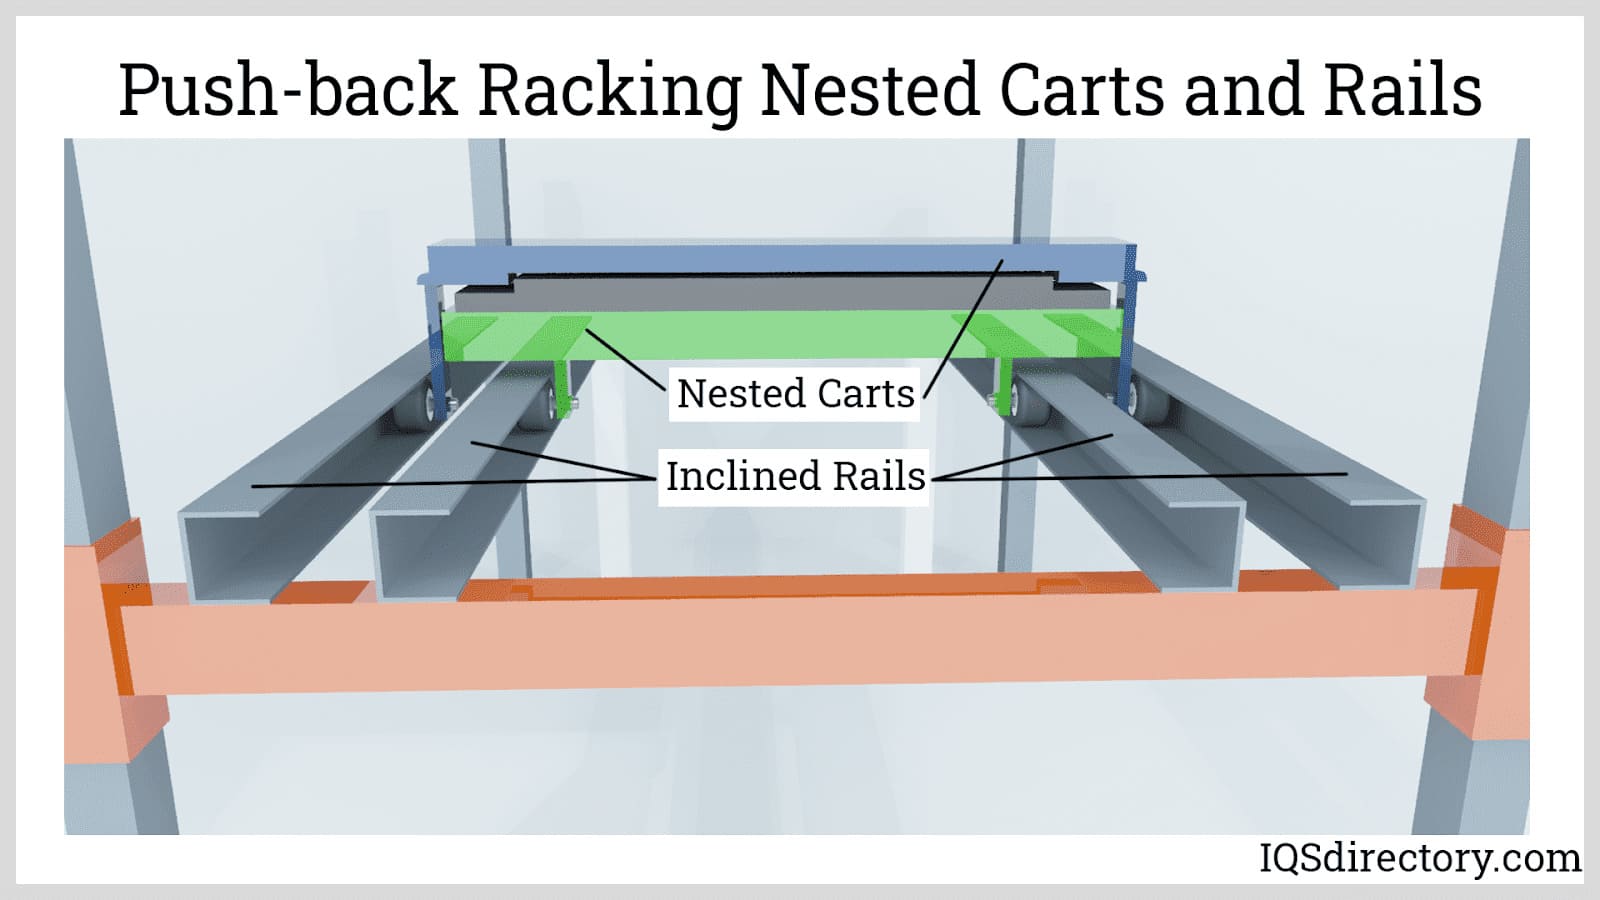 Push-back Racking Nested Carts and Rails